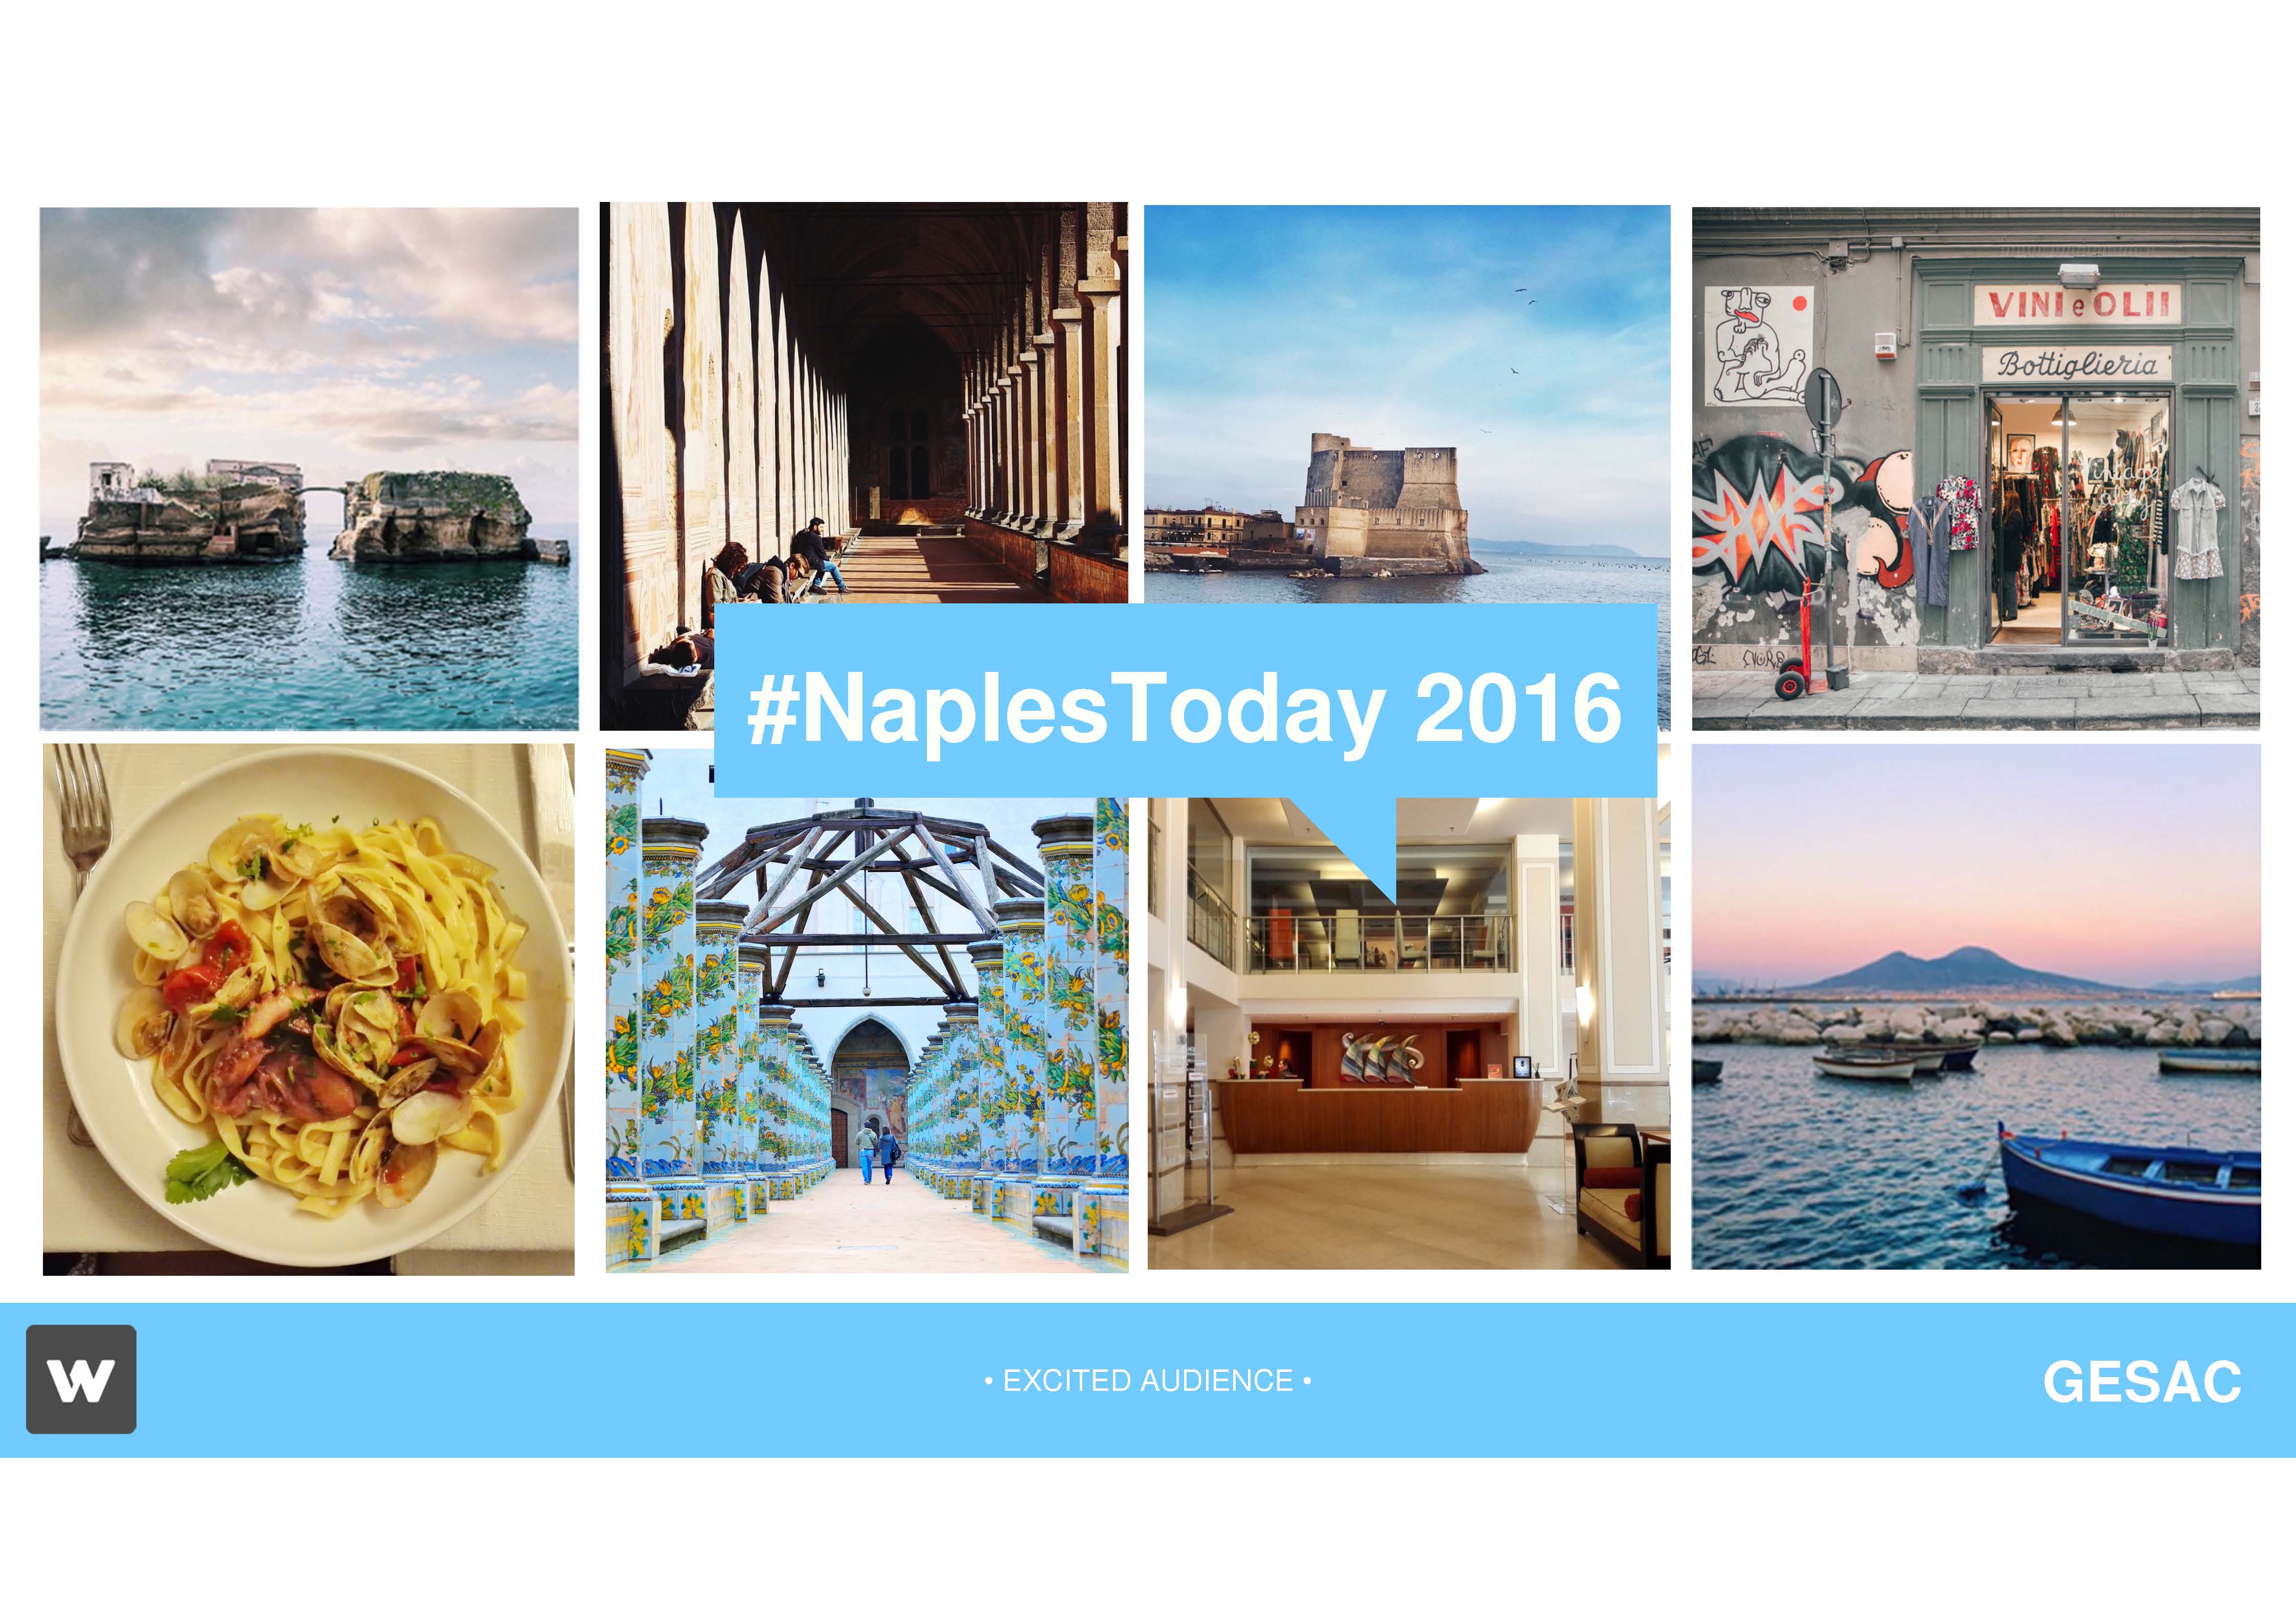 Napoli vista dai blogger stranieri